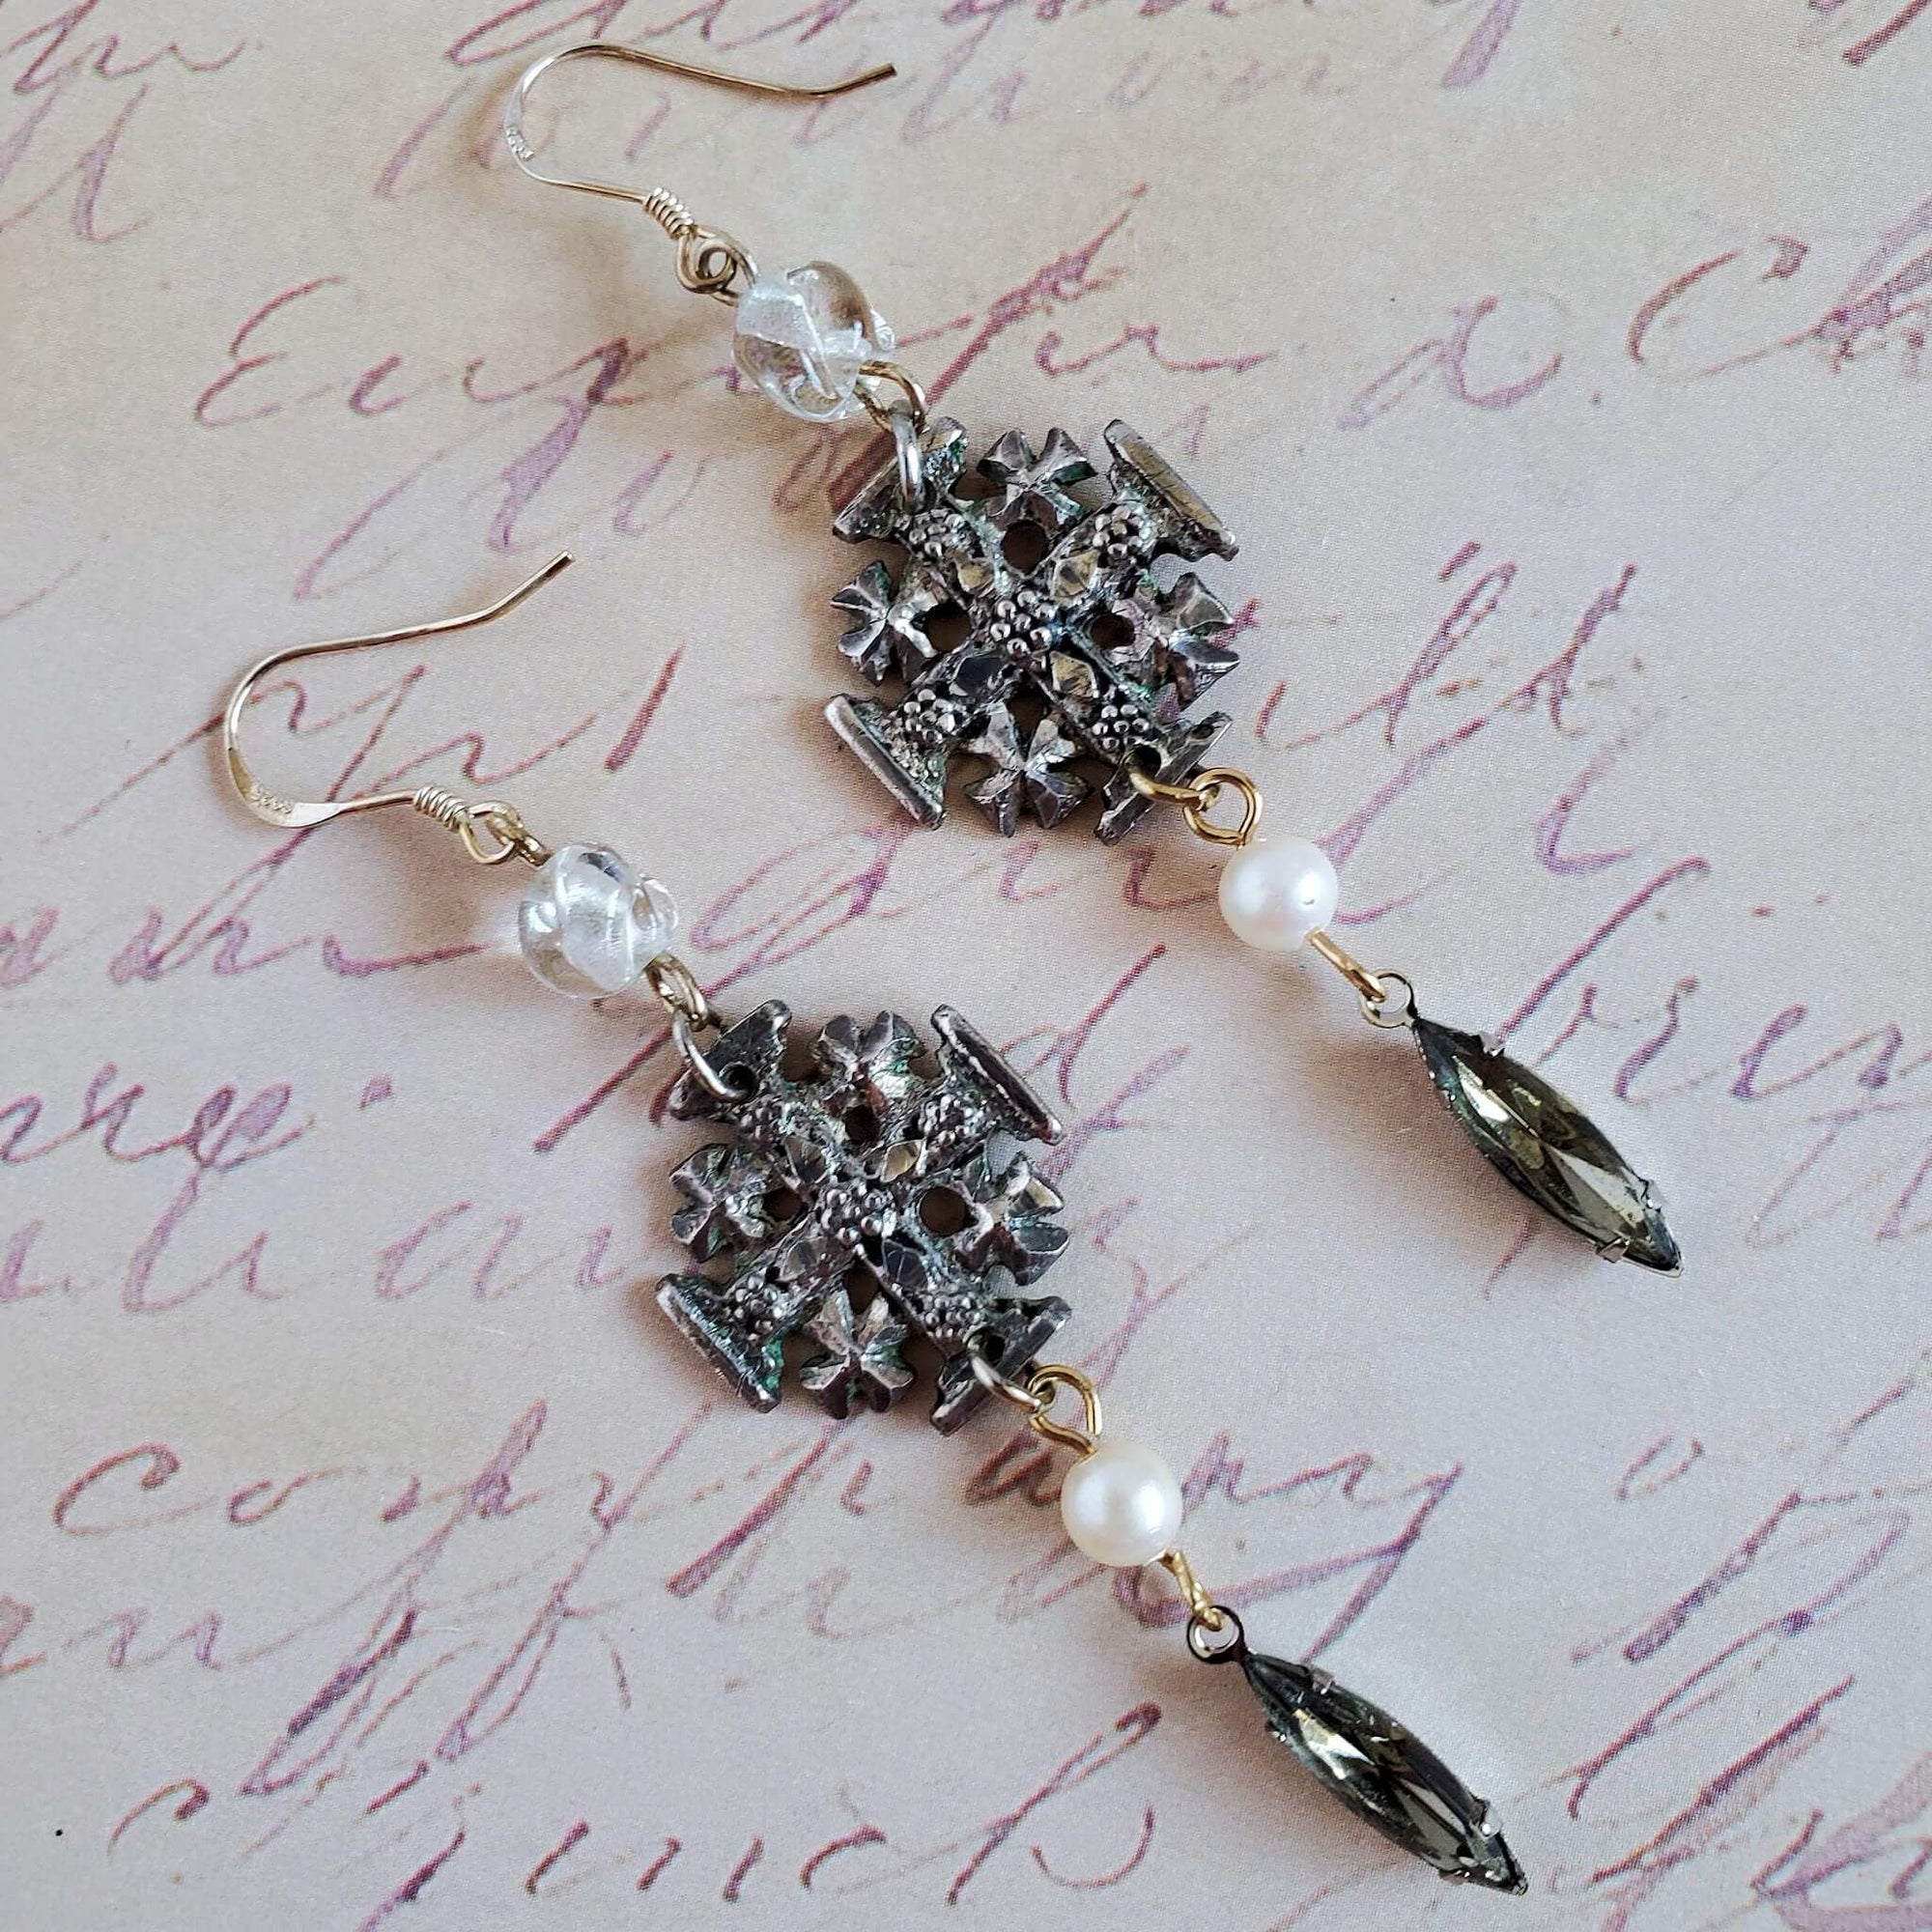 Vintage Maltese Cross Earrings with Vintage Beads and Smoky Crystal Gemstone